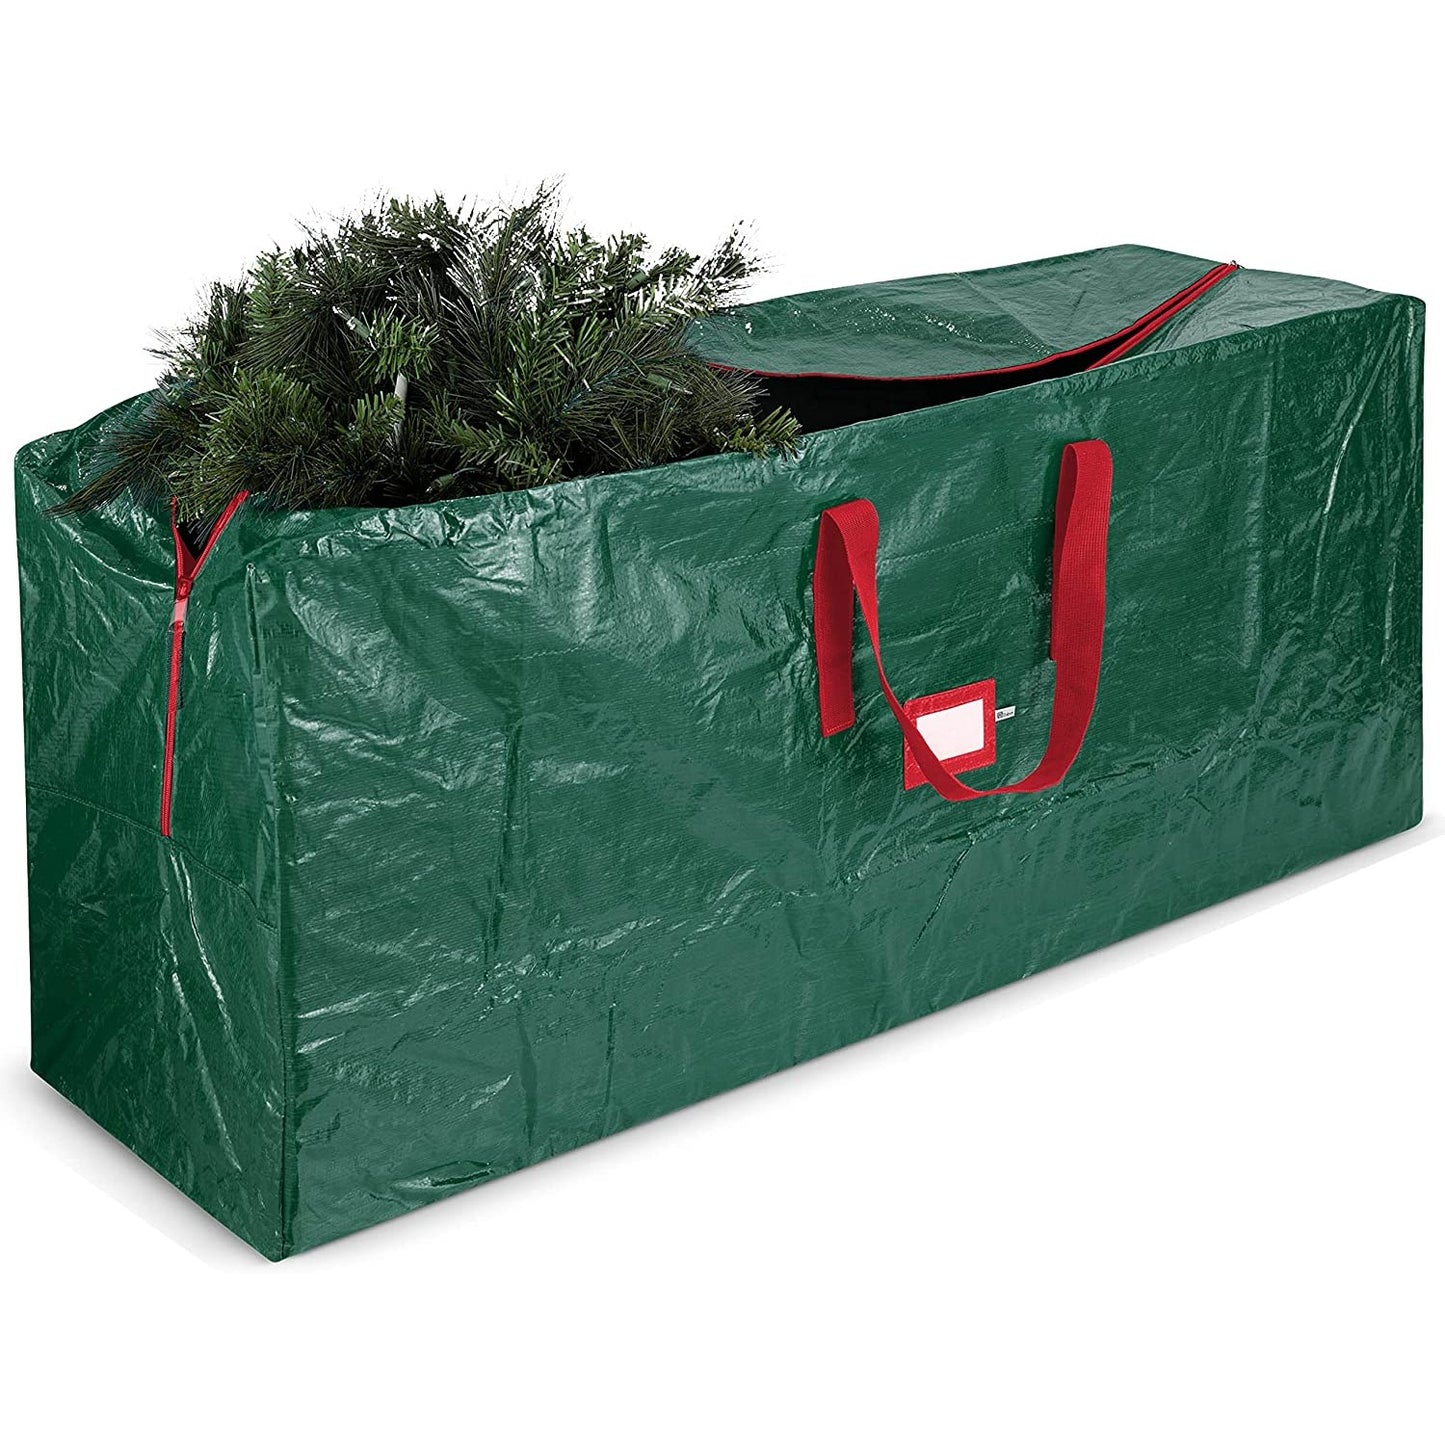 A large green Christmas tree storage bag with a Christmas tree inside.